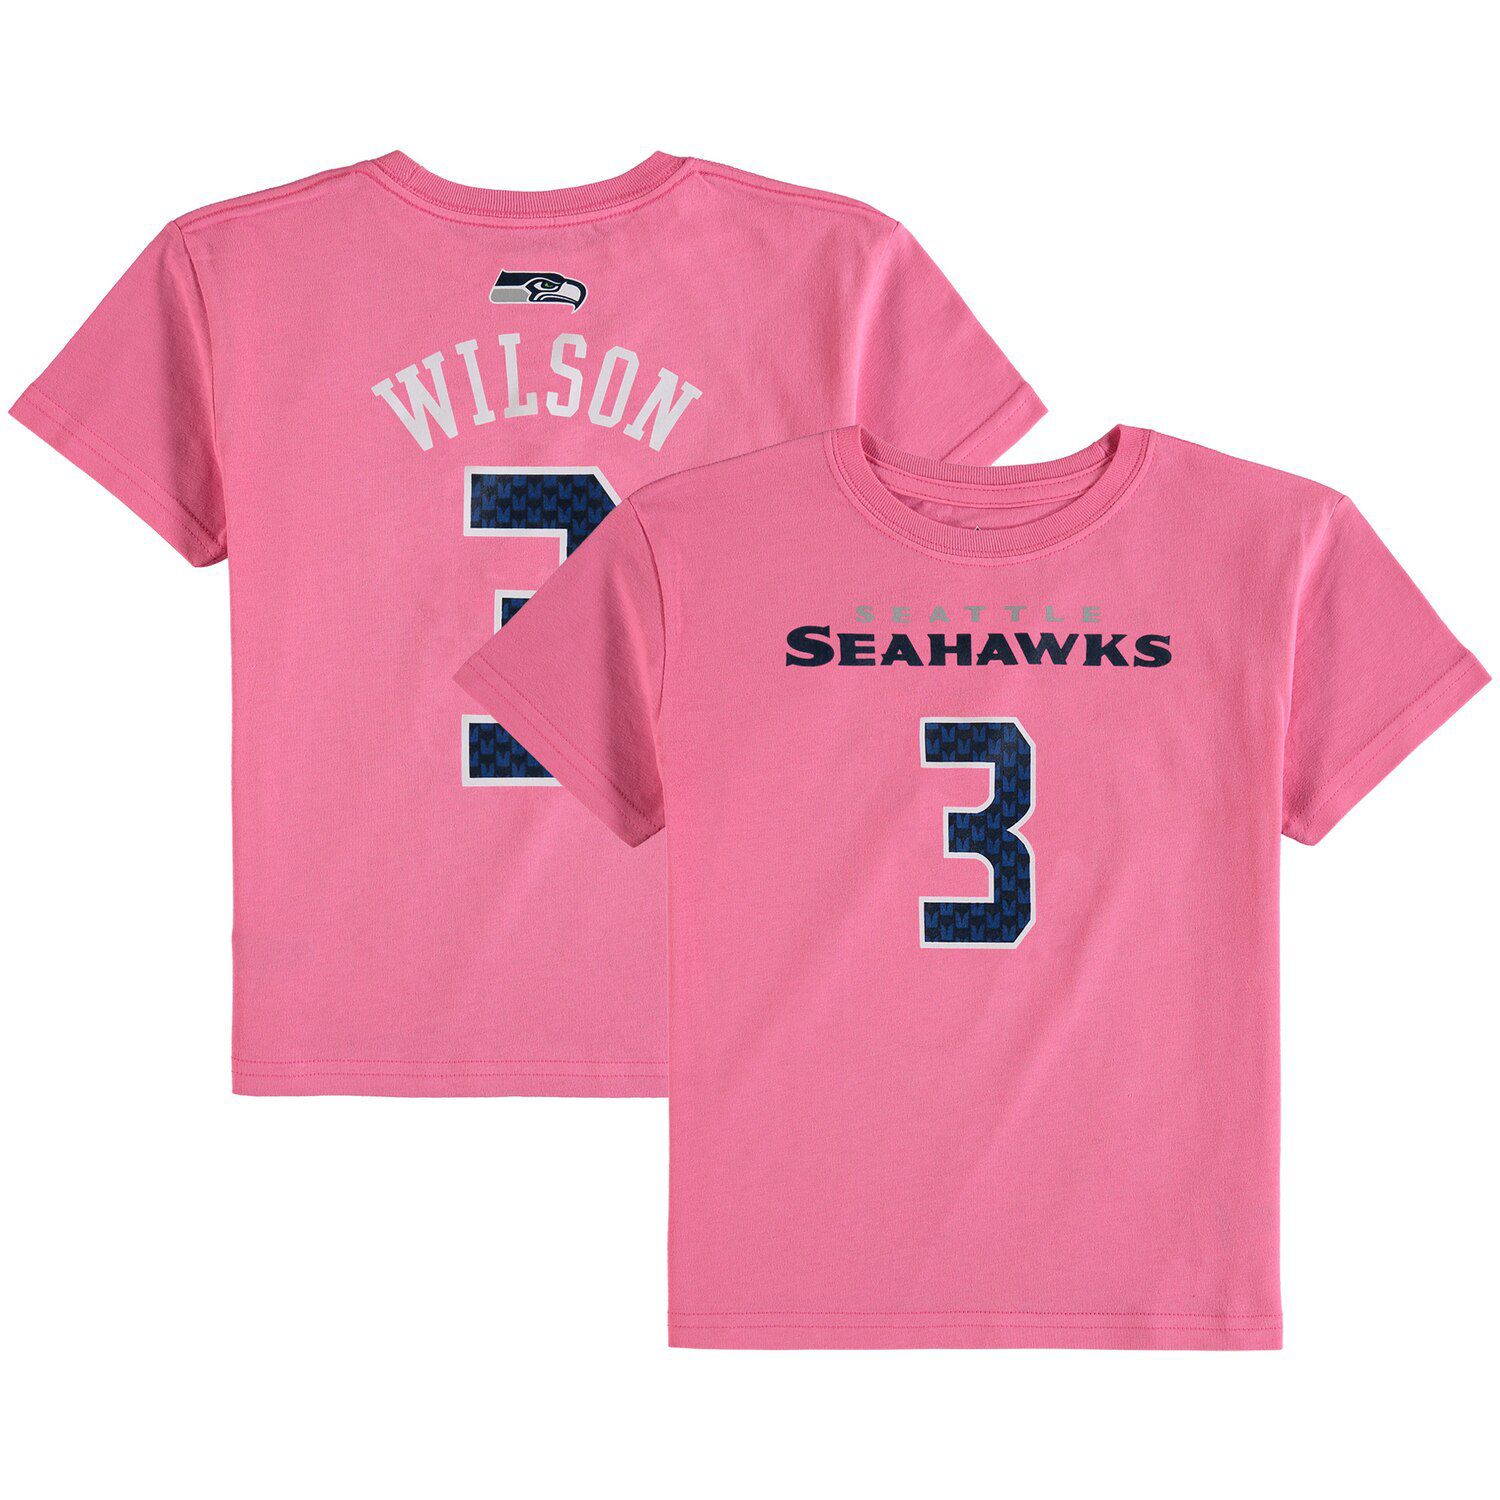 russell wilson pink jersey